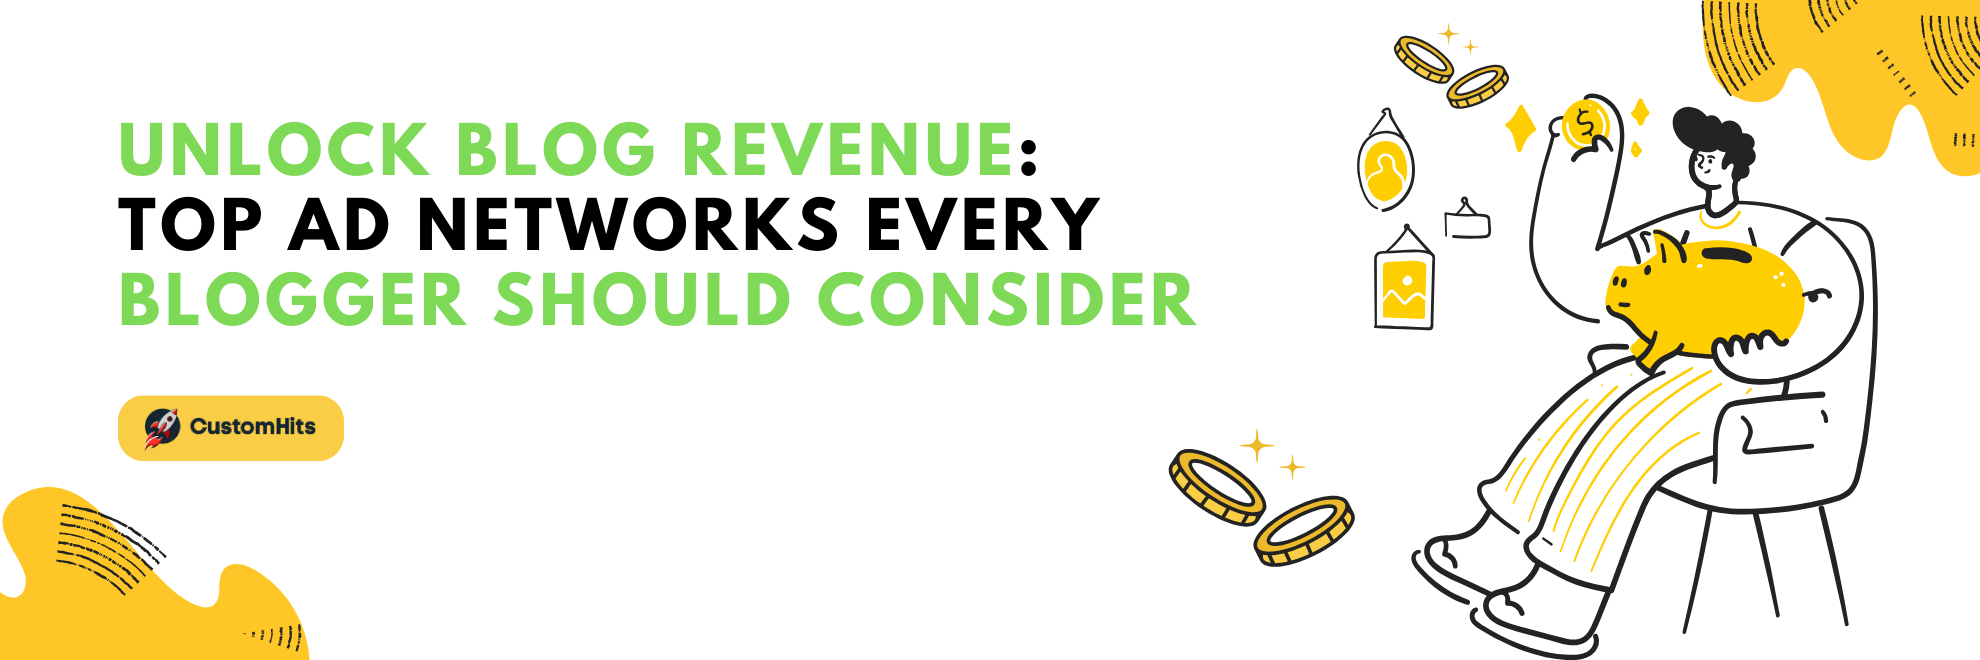 Unlock Blog Revenue: Top Ad Networks Every Blogger Should Consider